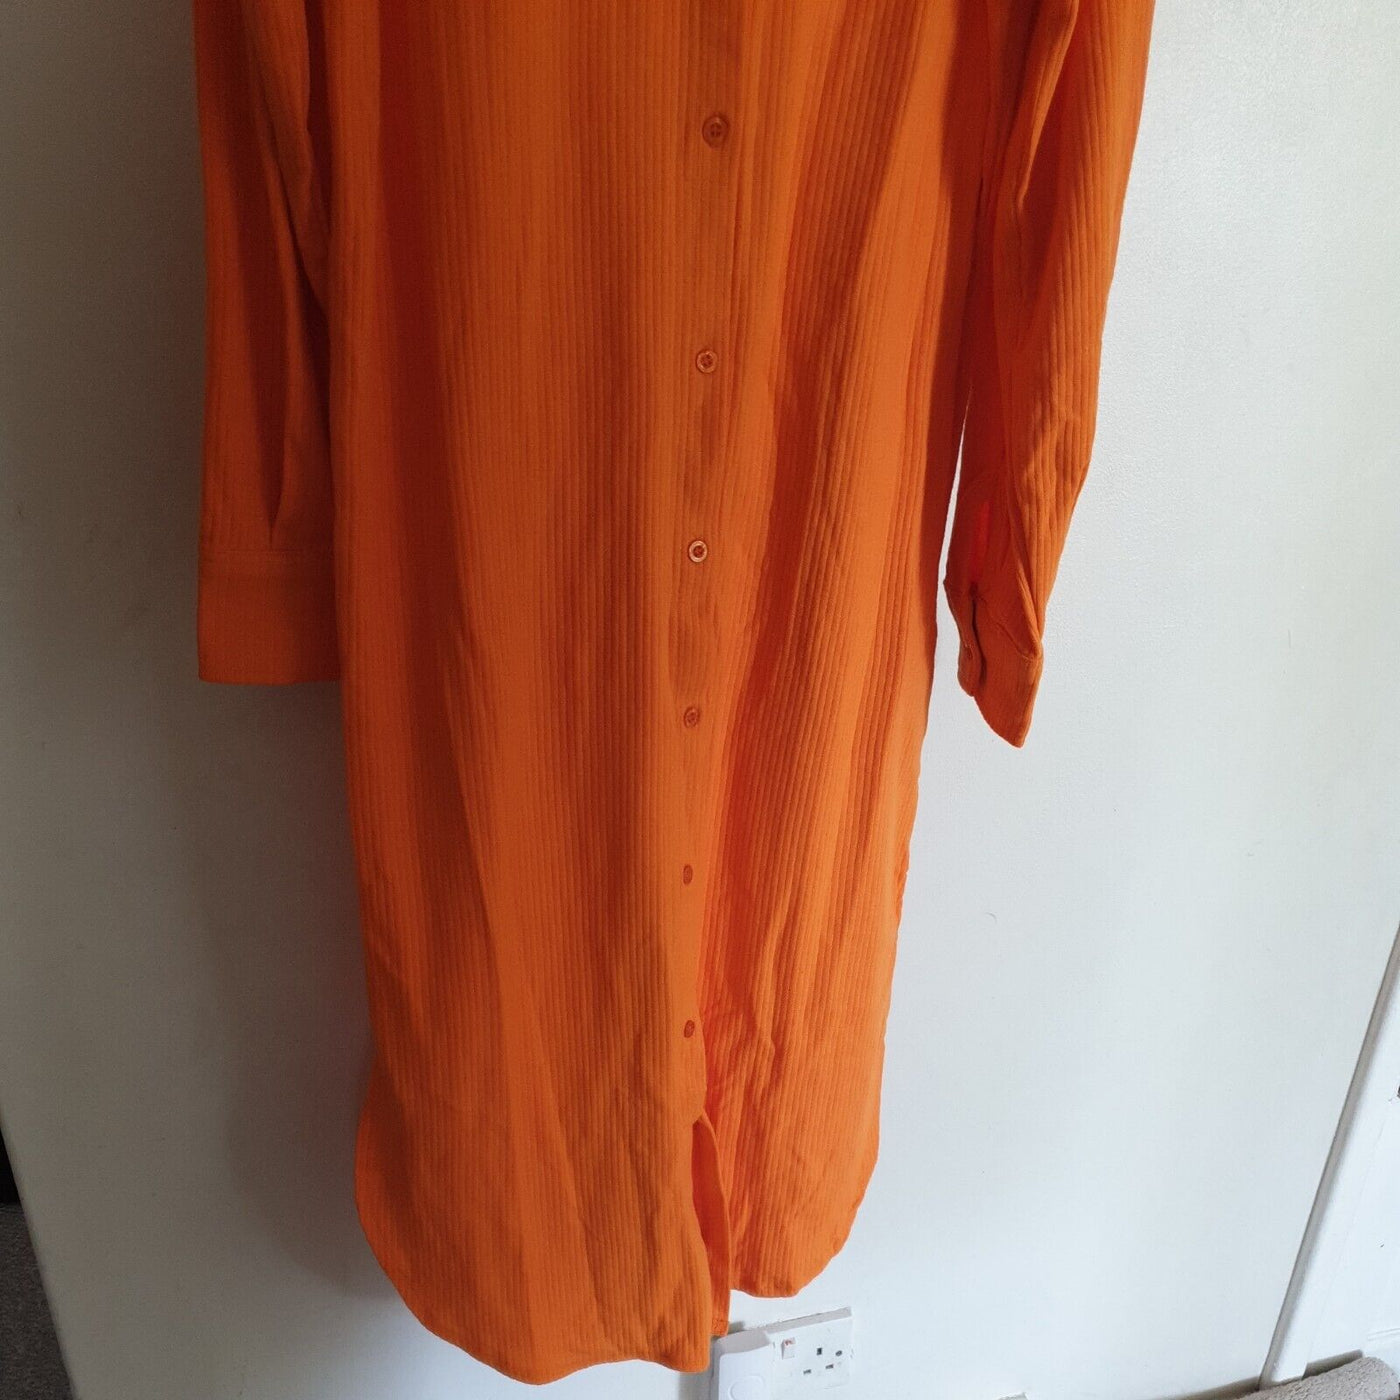 Missguided oversized rib Orange Jumper midi Dress Uk12****Ref V4